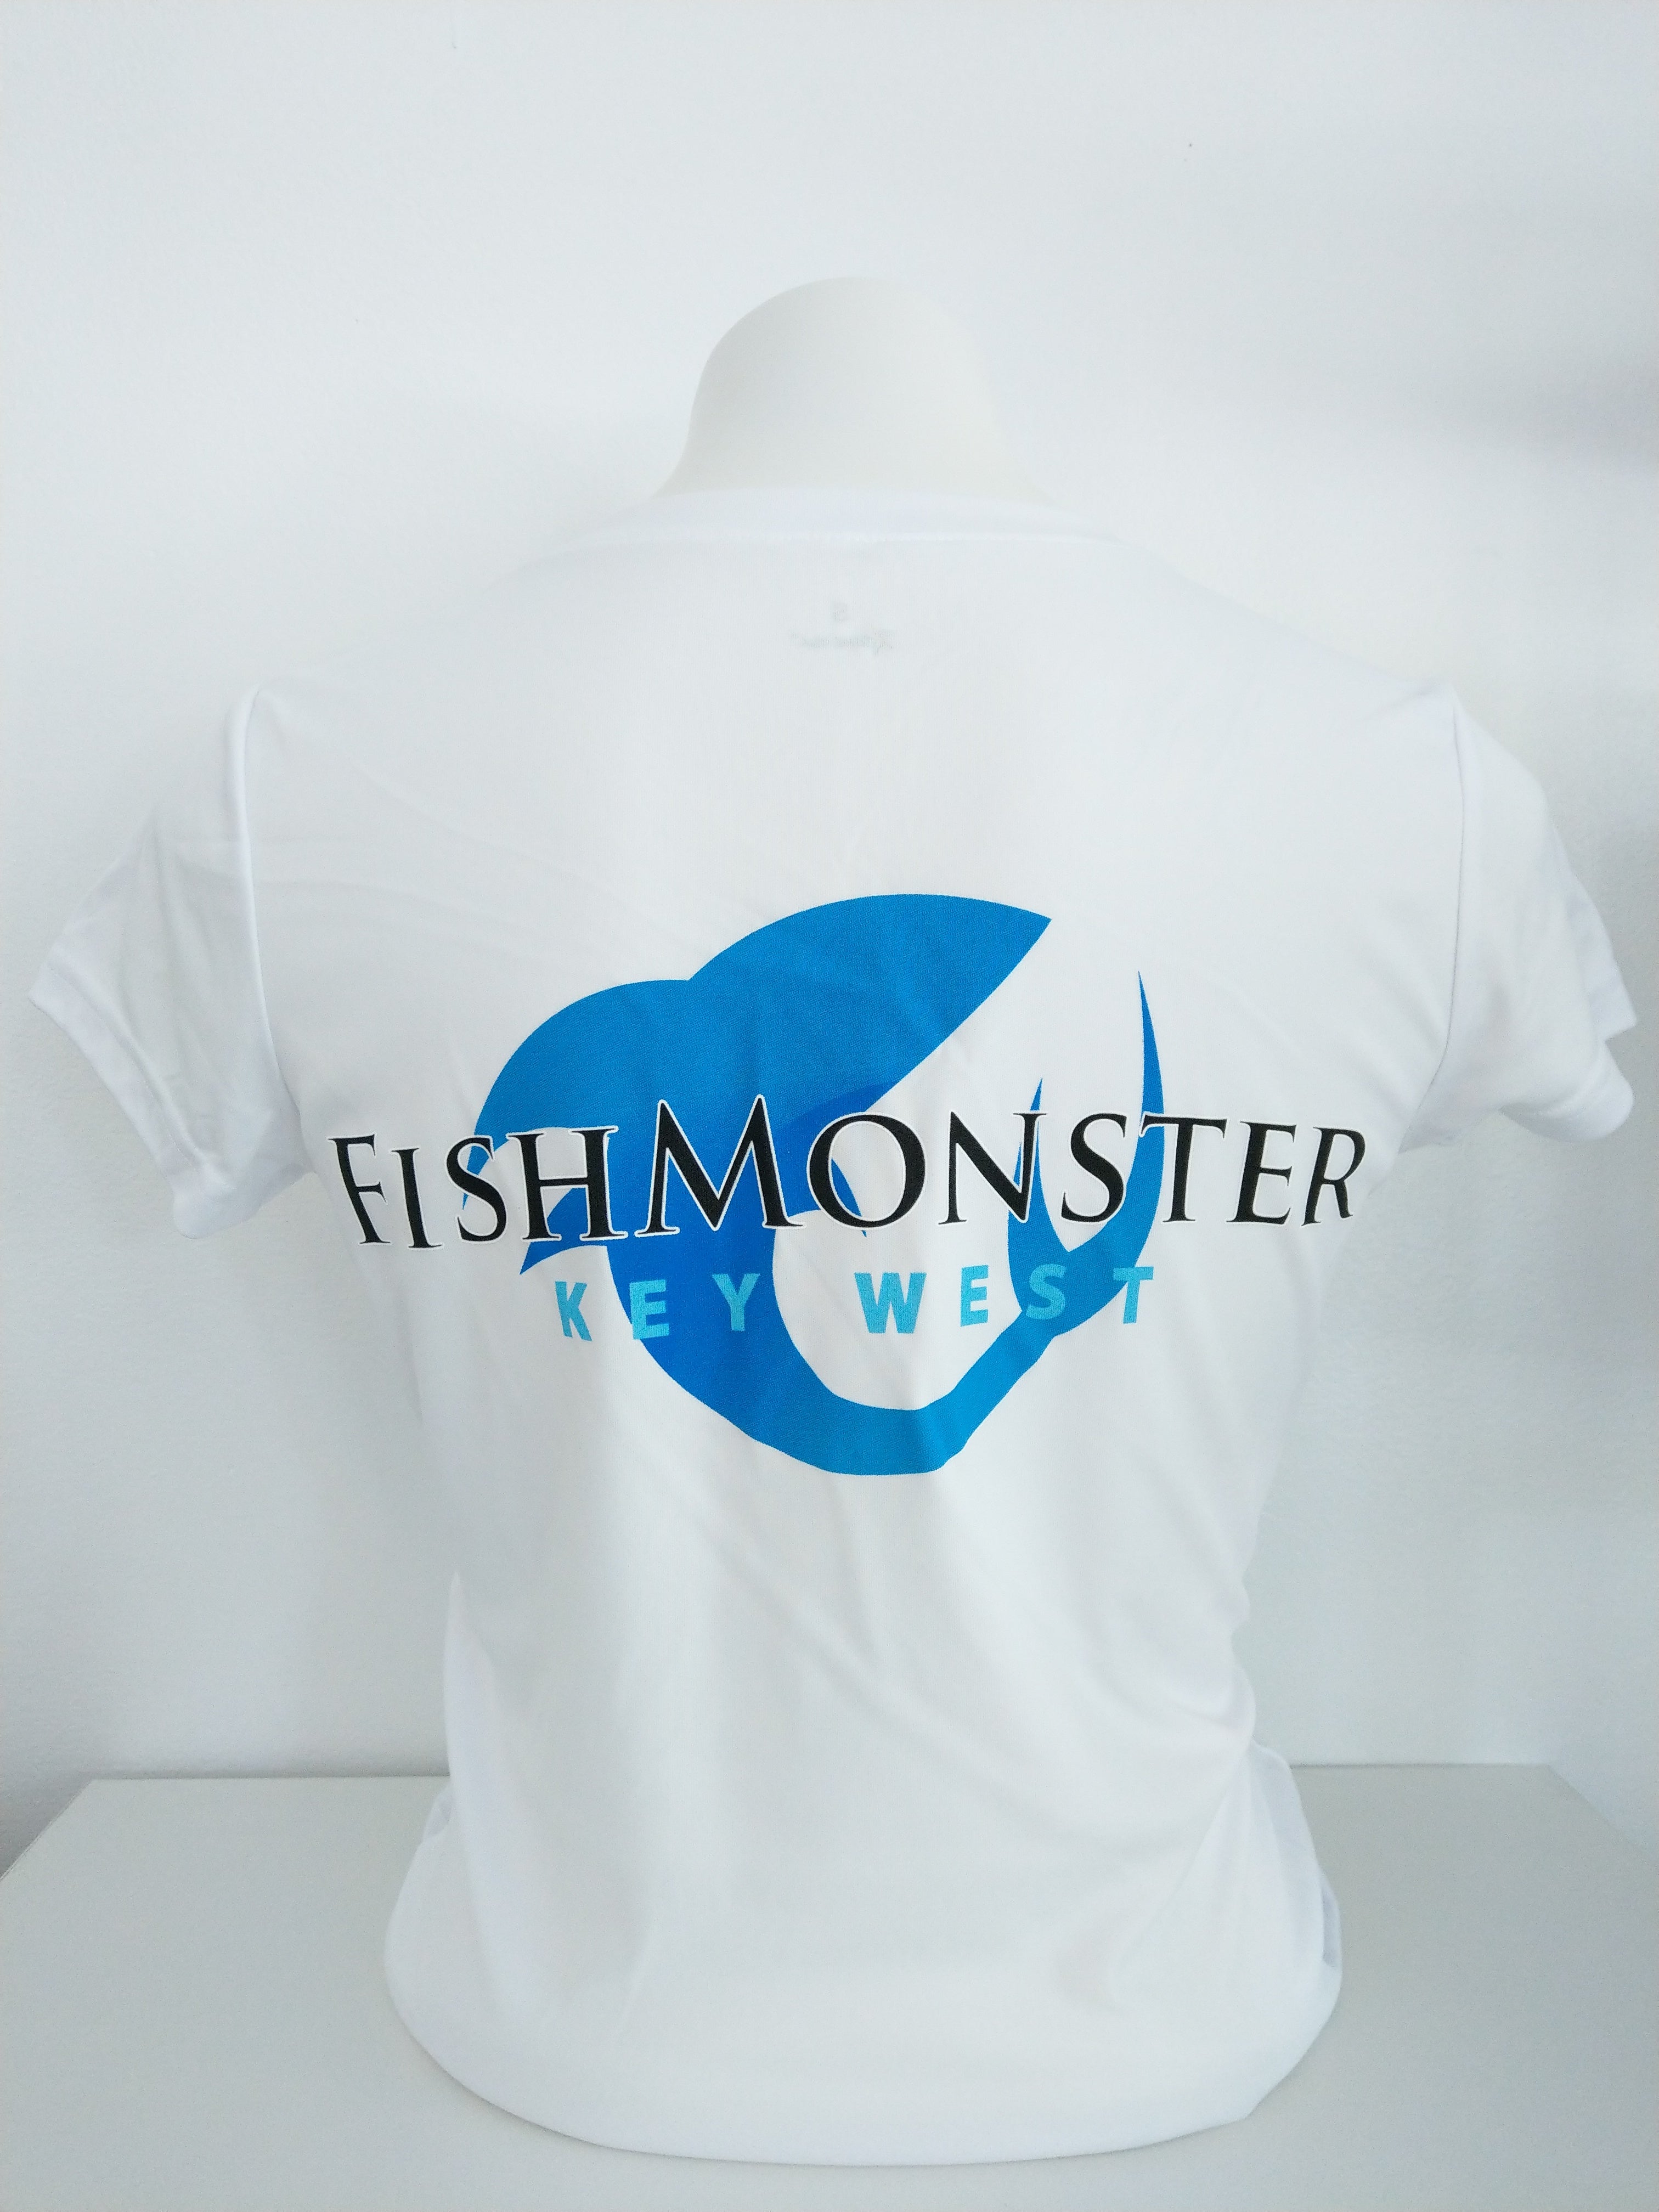 Cool T Short Sleeve Performance Fishing Shirt